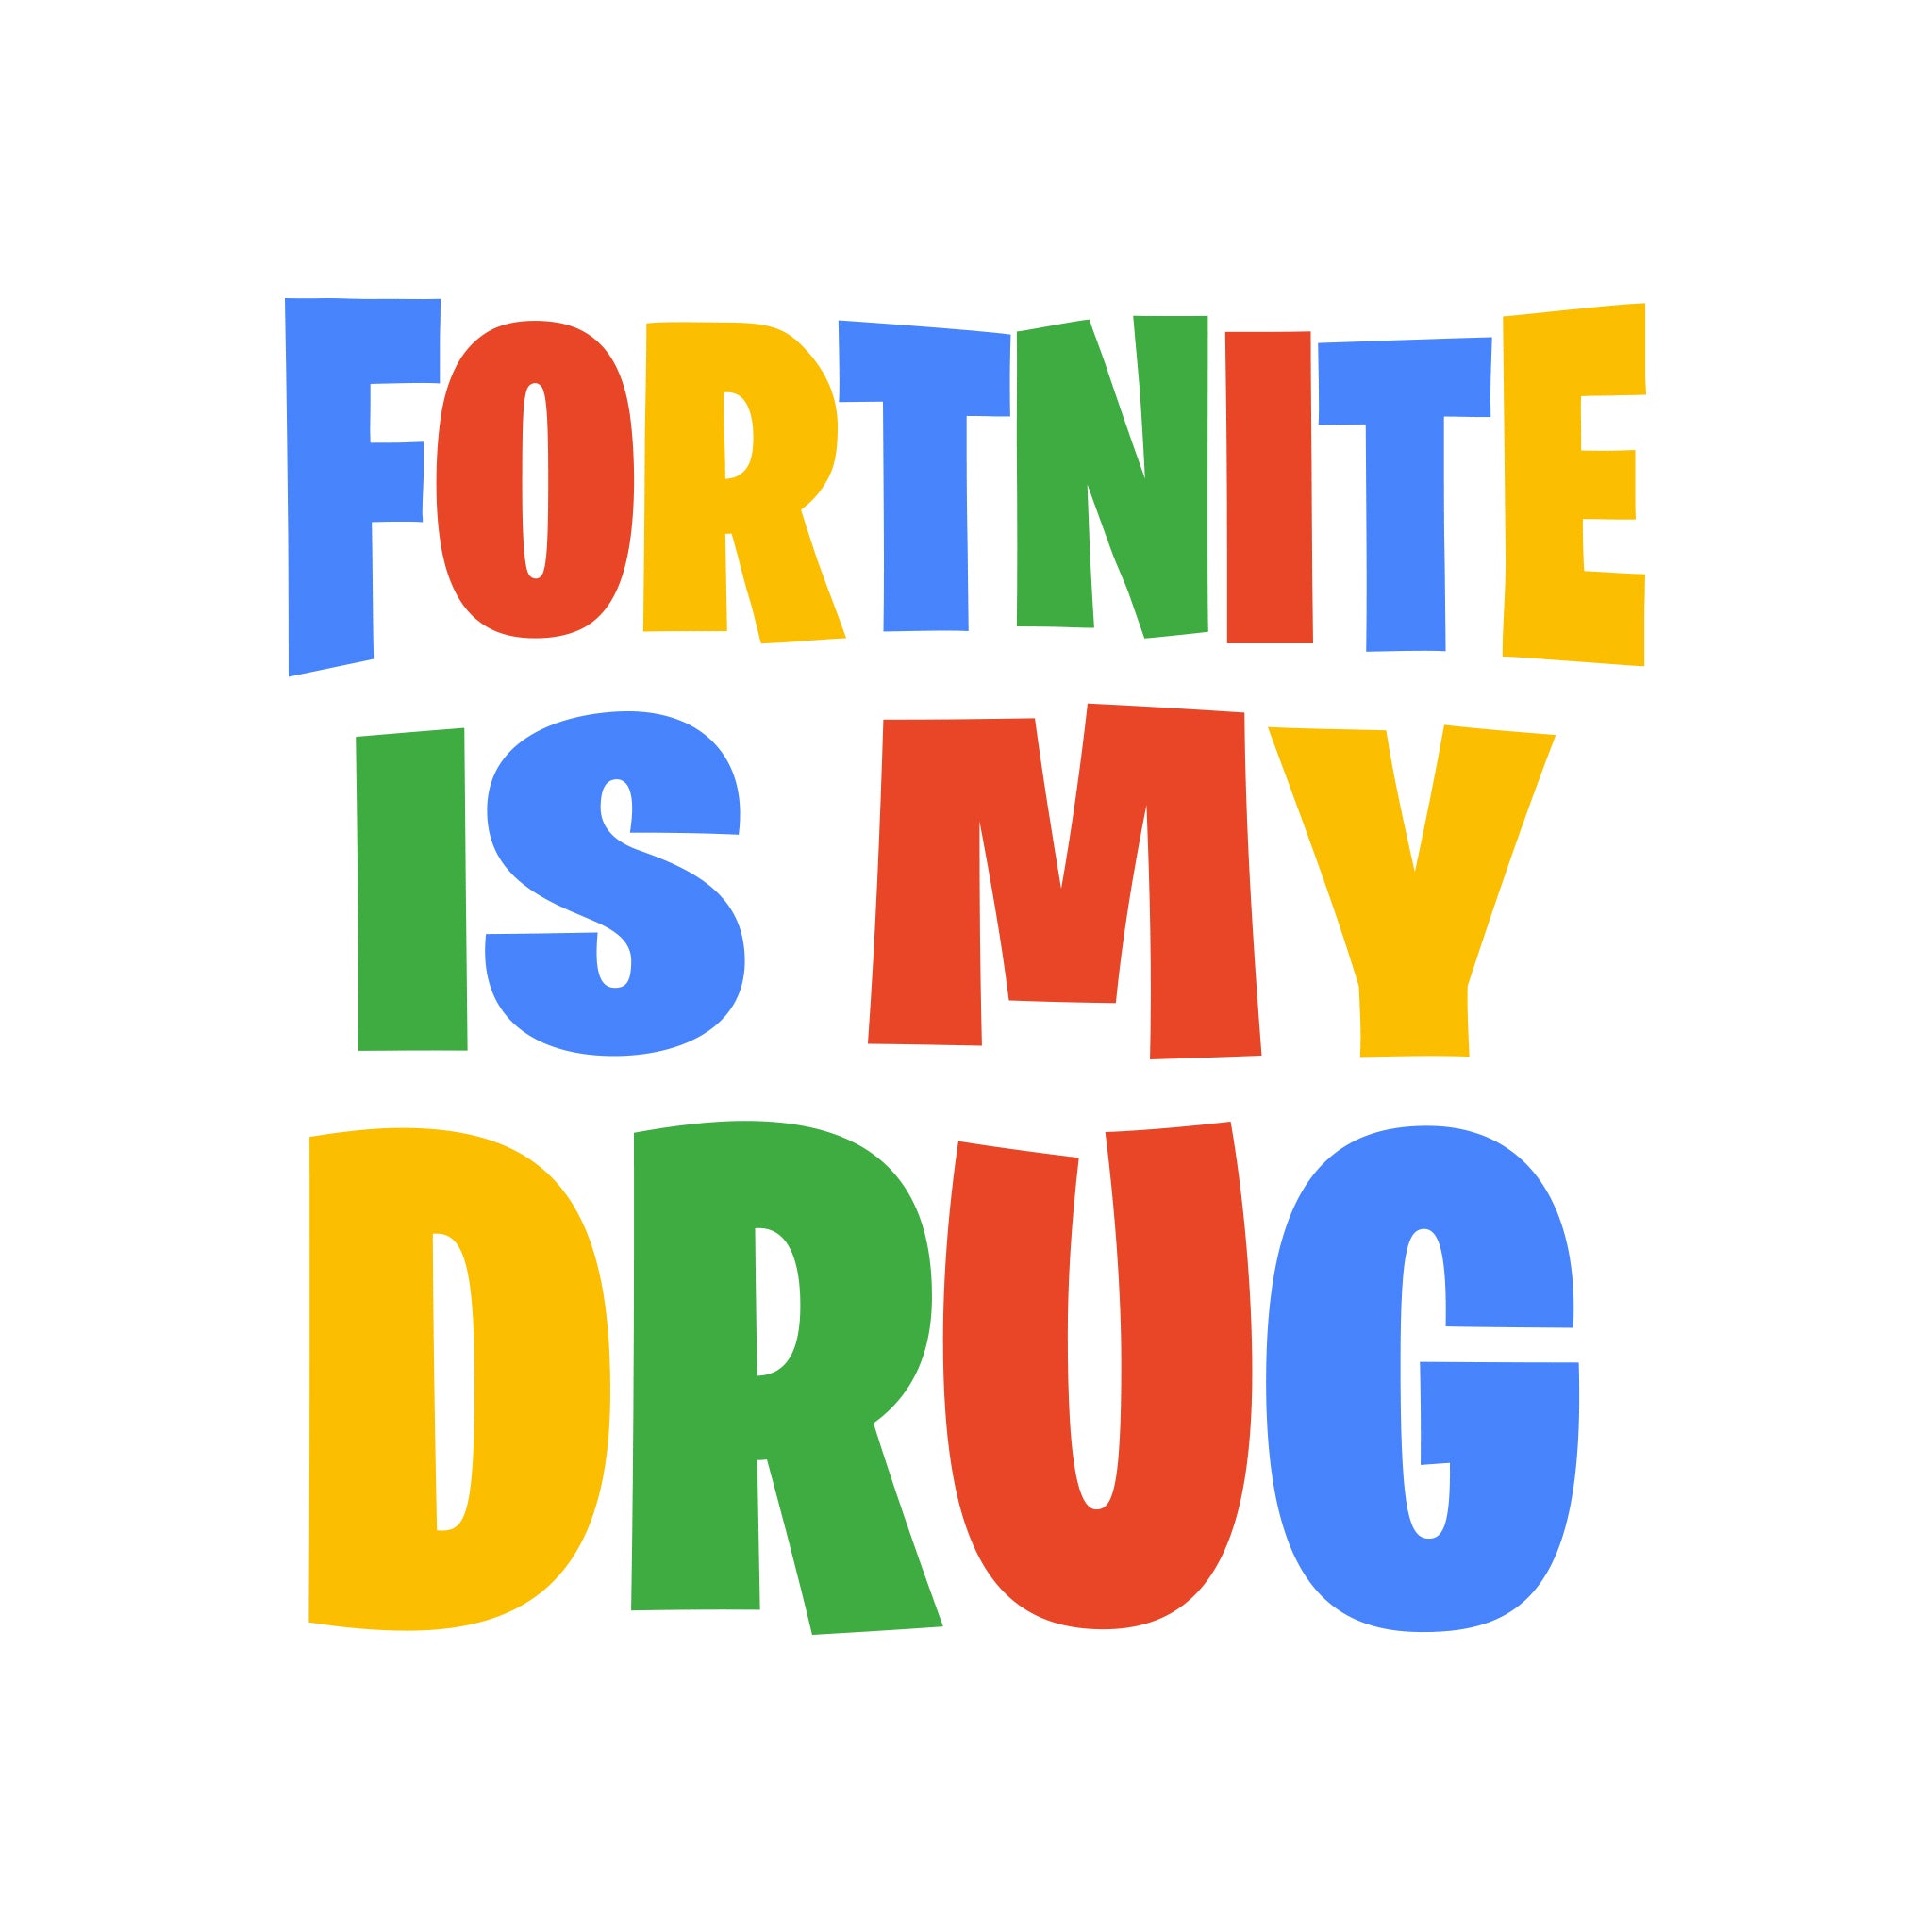 Fortnite is my drug